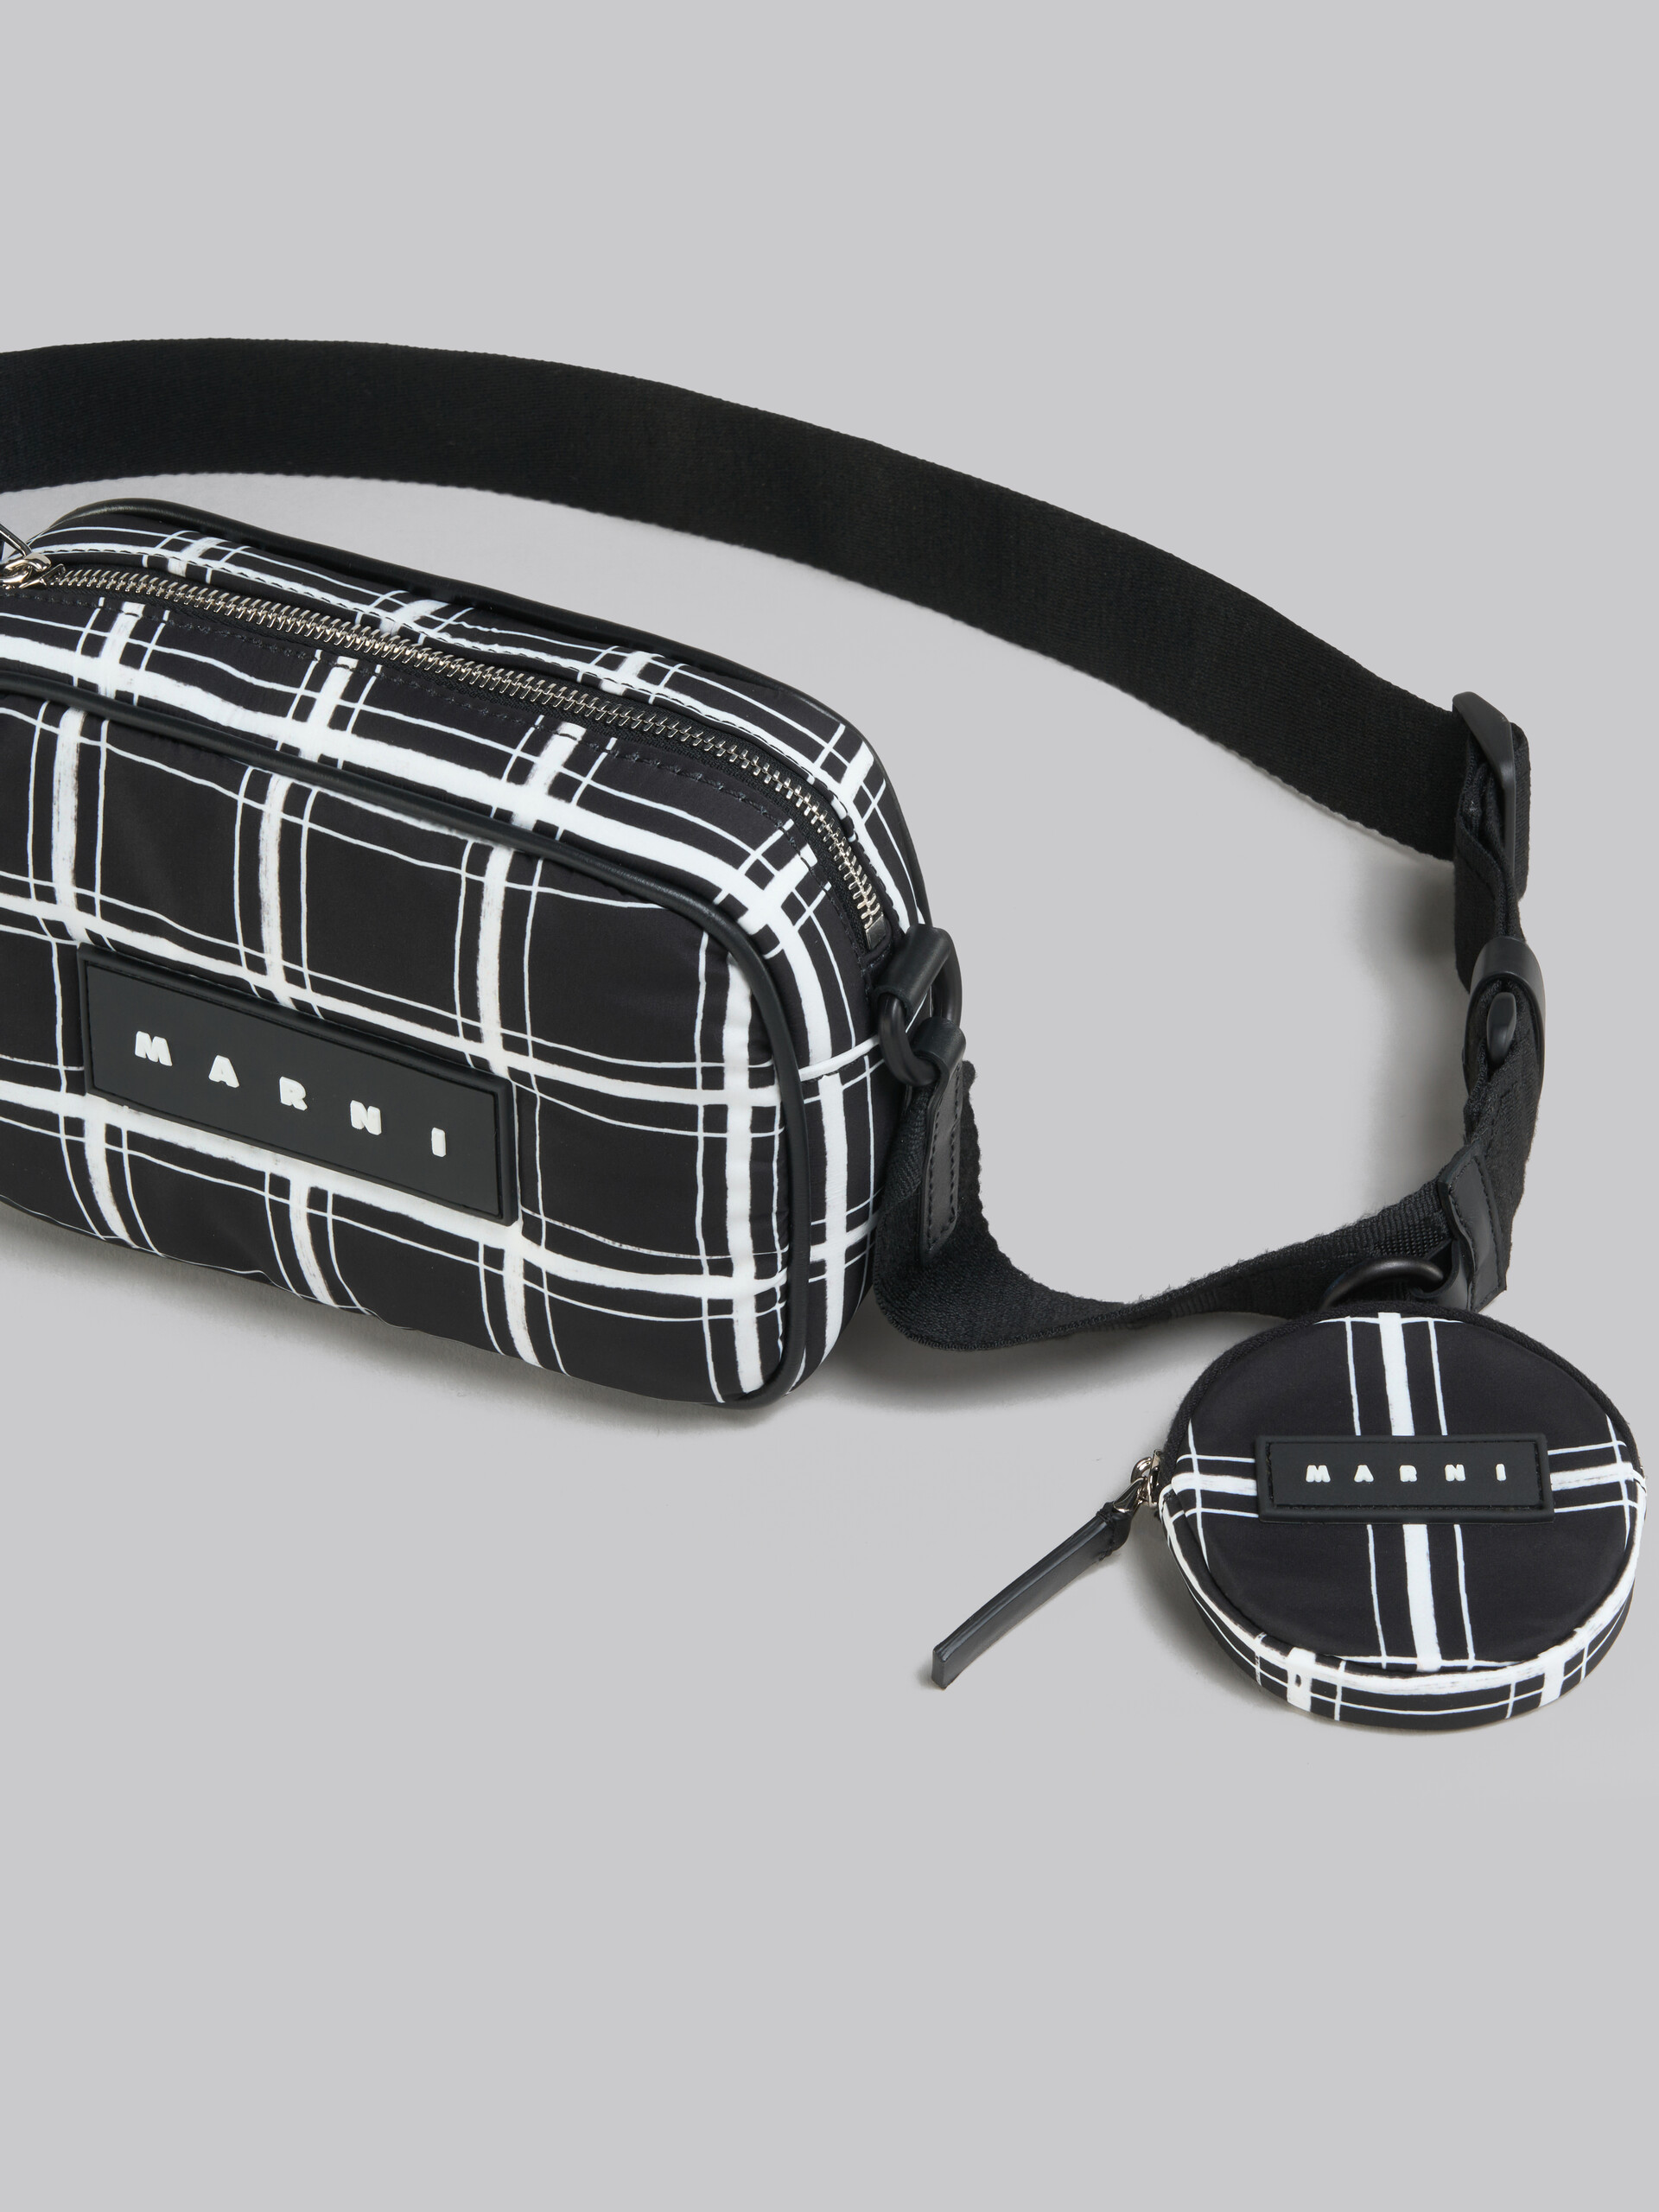 The Sharp camera bag in Black/Beige